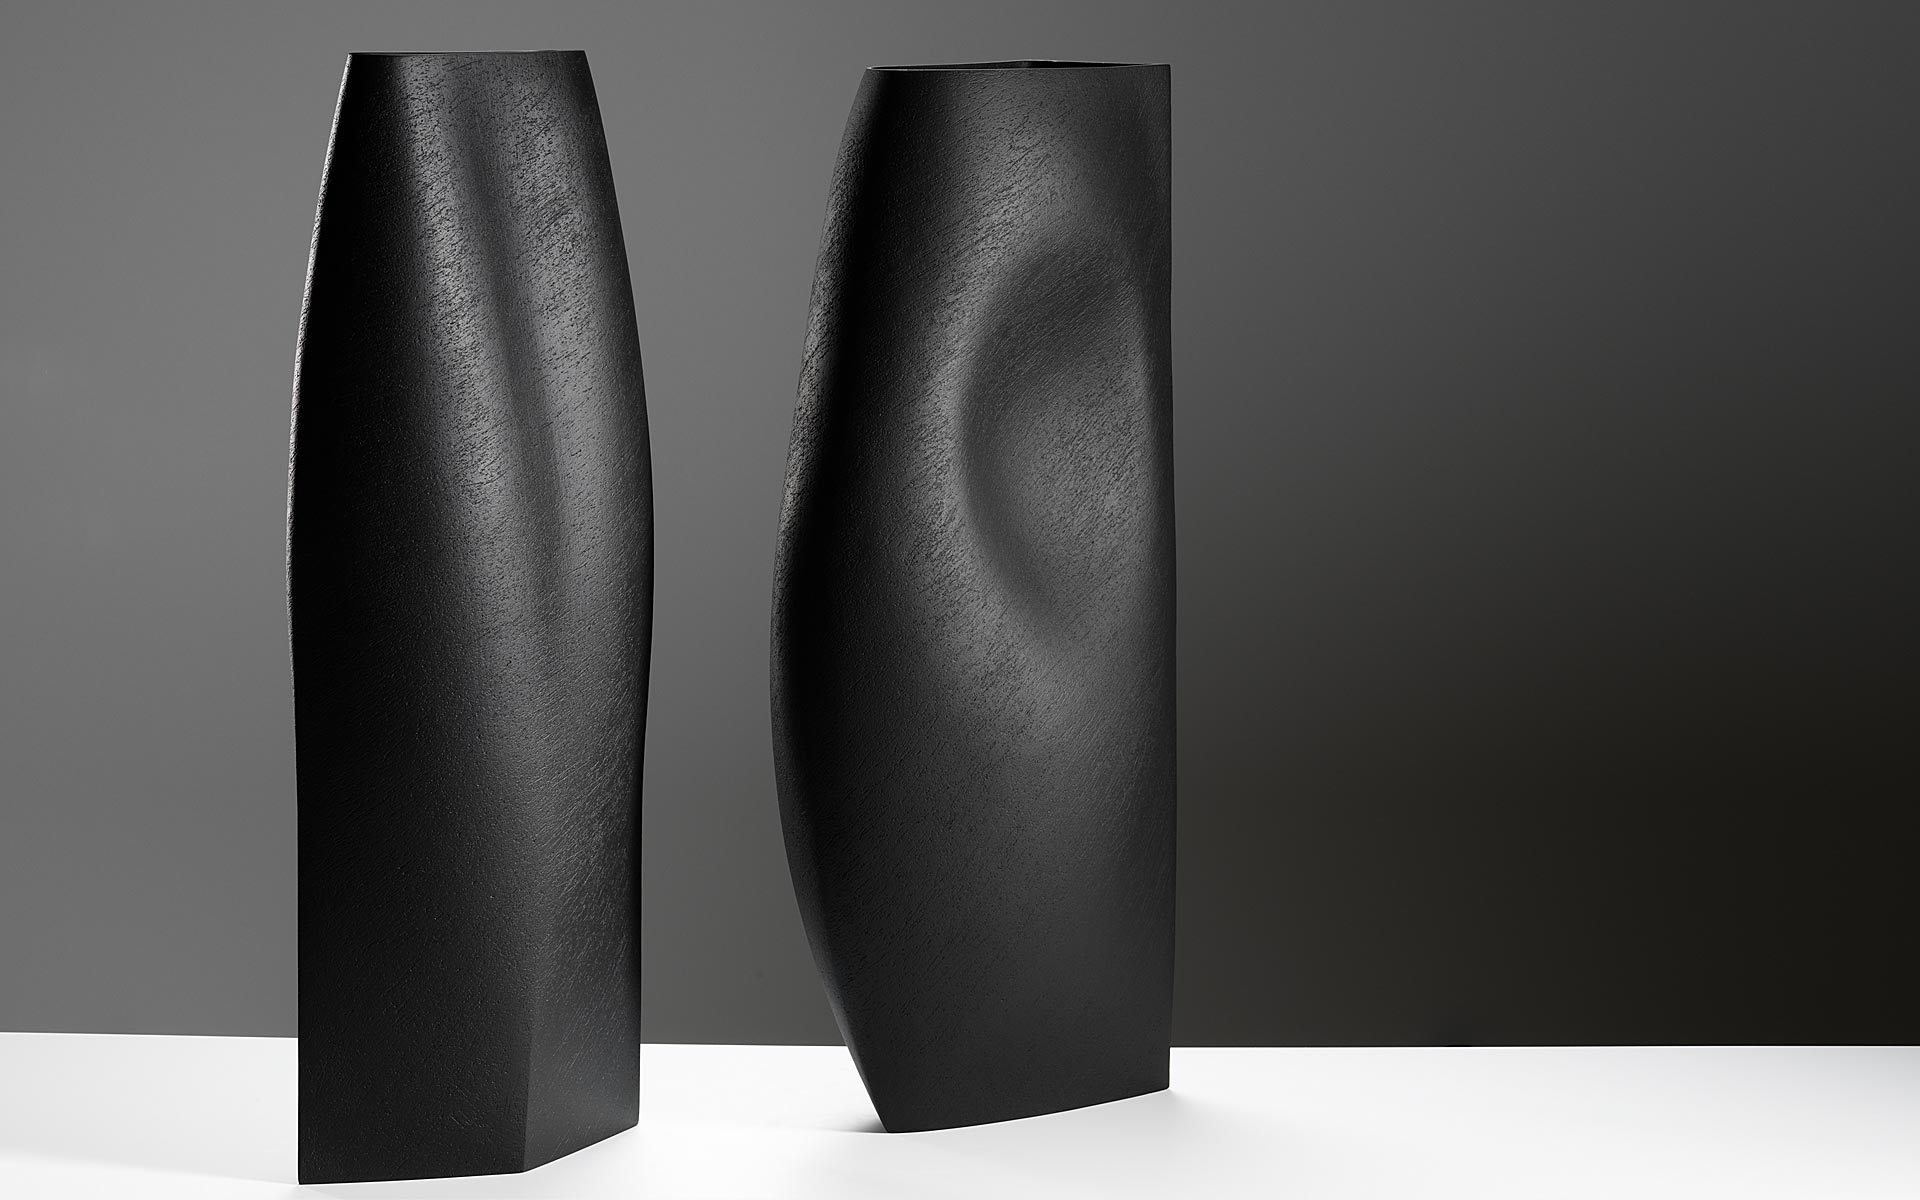 Two black vessels